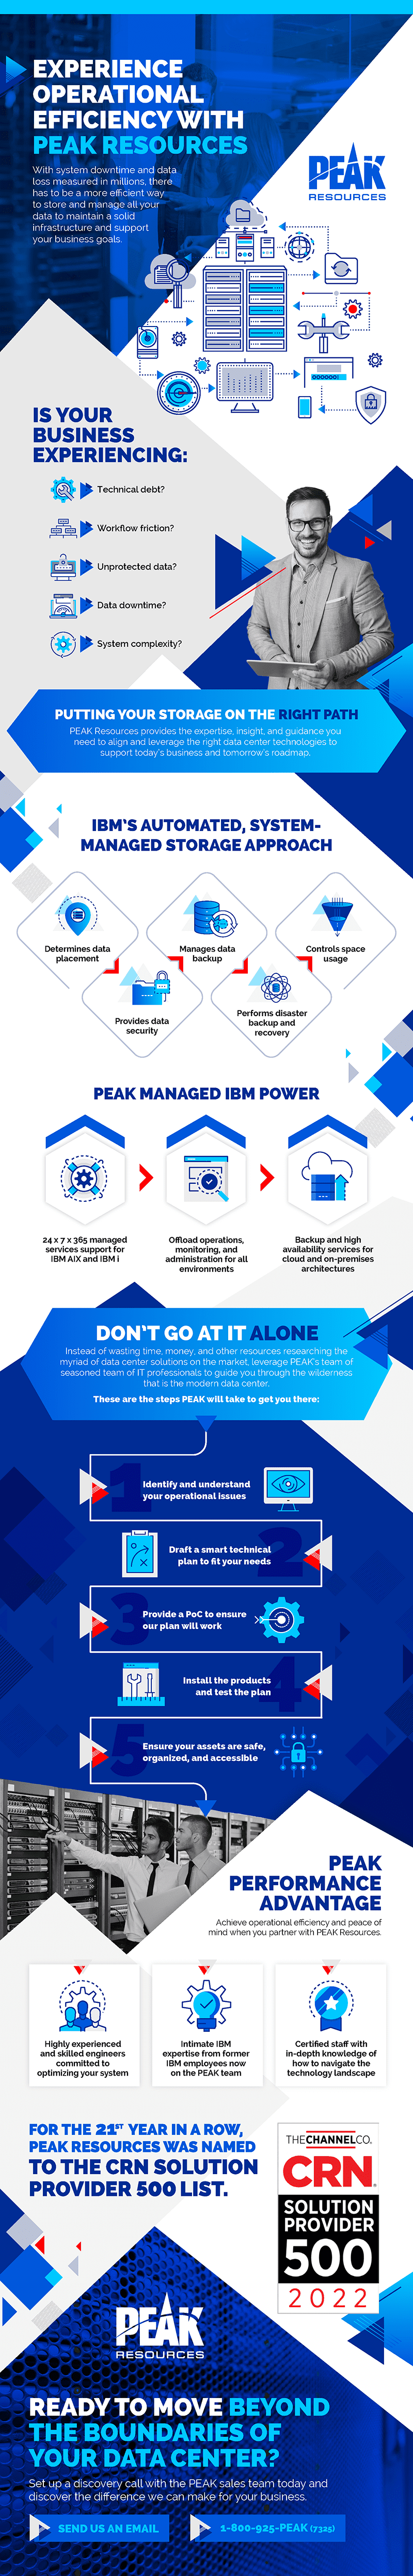 PEAK Resources IBM Storage Infographic